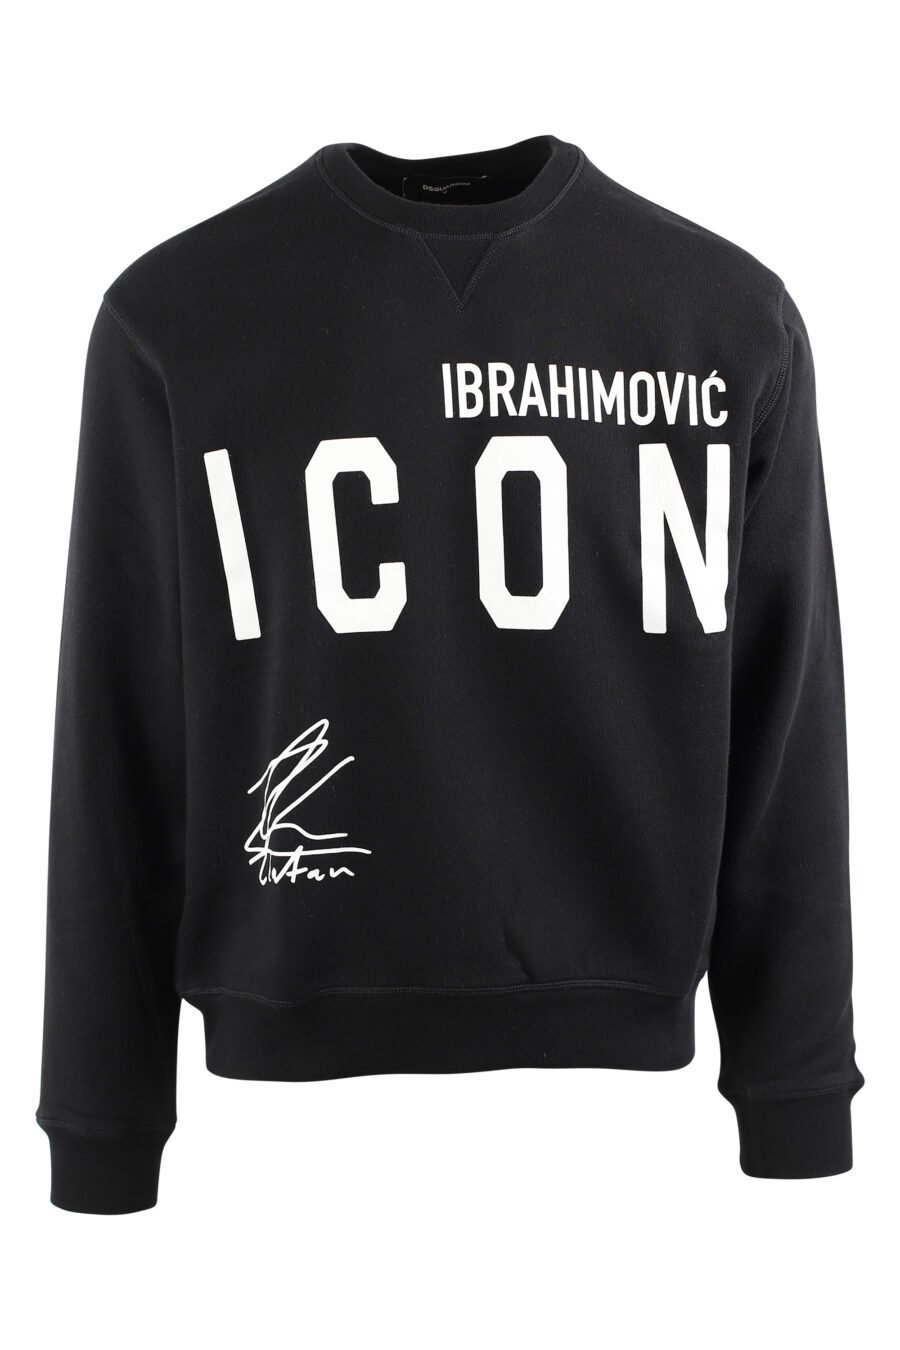 Sweat noir avec logo "icon ibrahimovic" - IMG 0441